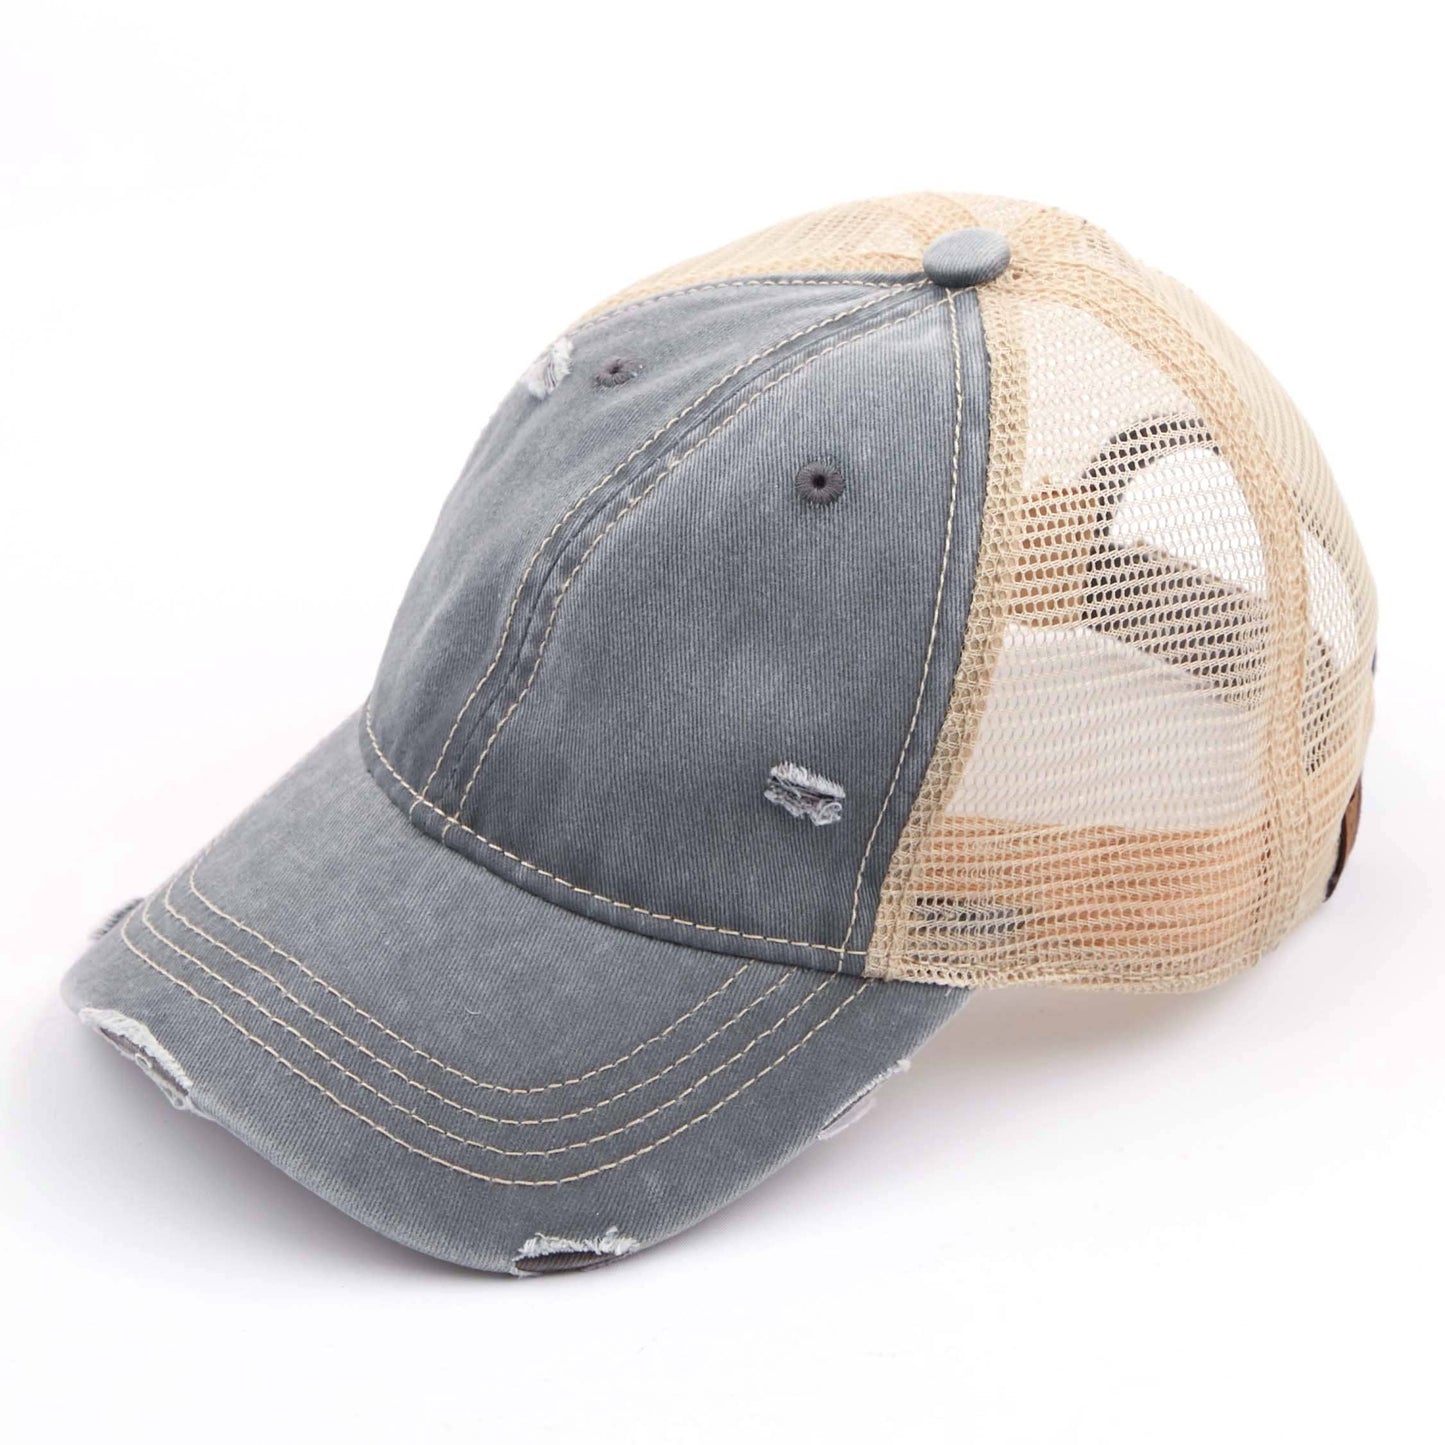 C.C Distressed washed mesh baseball cap